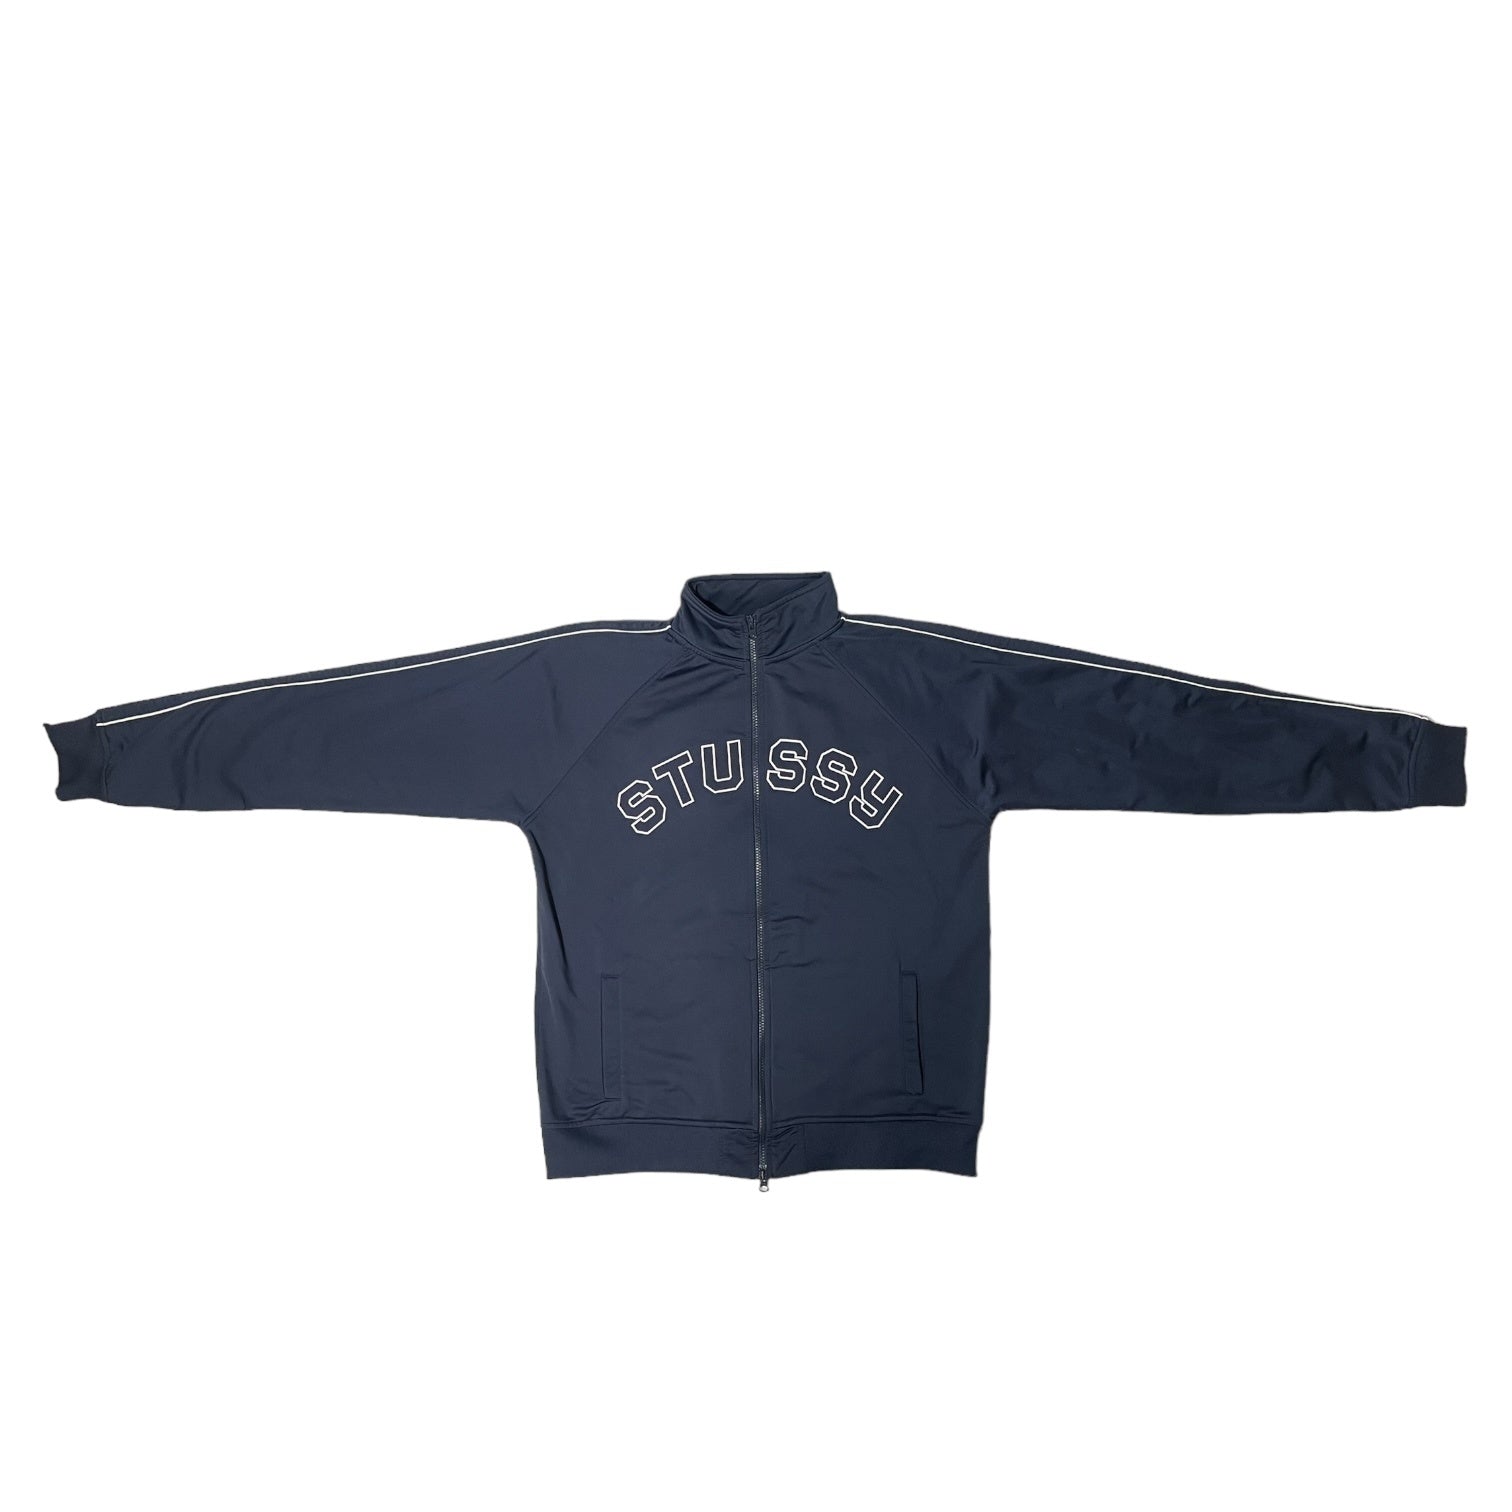 STUSSY(ステューシー) 90's~00's logo track jacket ロゴ トラックジャケット ジャージ SIZE M ネイビー  STUSSY JAPAN初期タグ OLD STUSSY